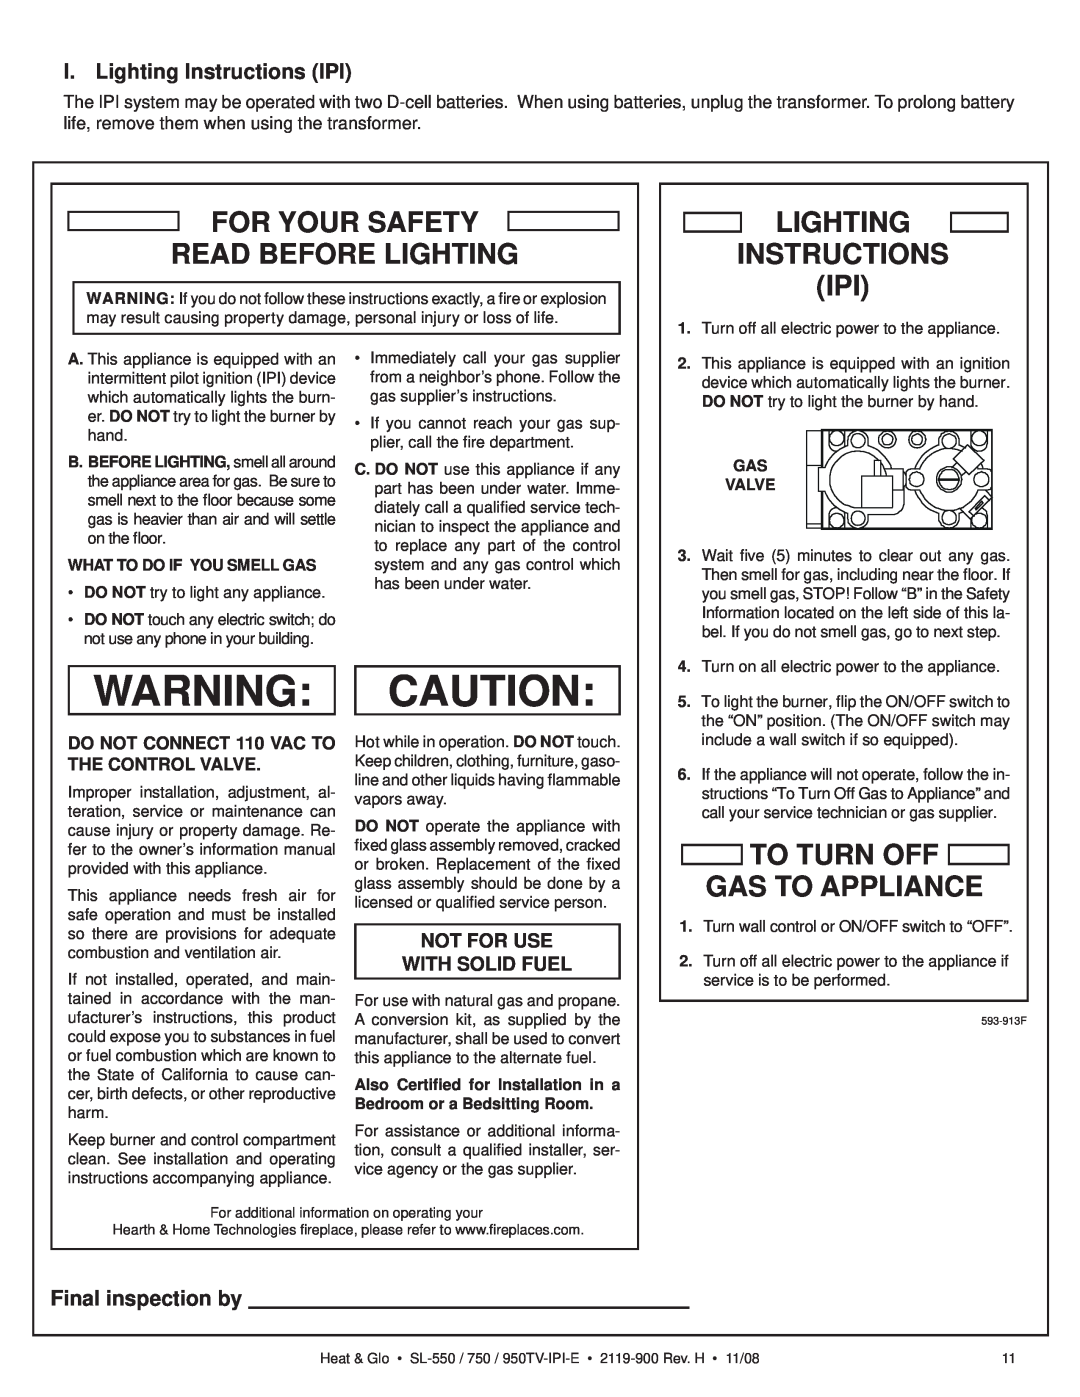 Hearth and Home Technologies SL-950TV-IPI-E I. Lighting Instructions IPI, Final inspection by, Warning Caution, Gas Valve 